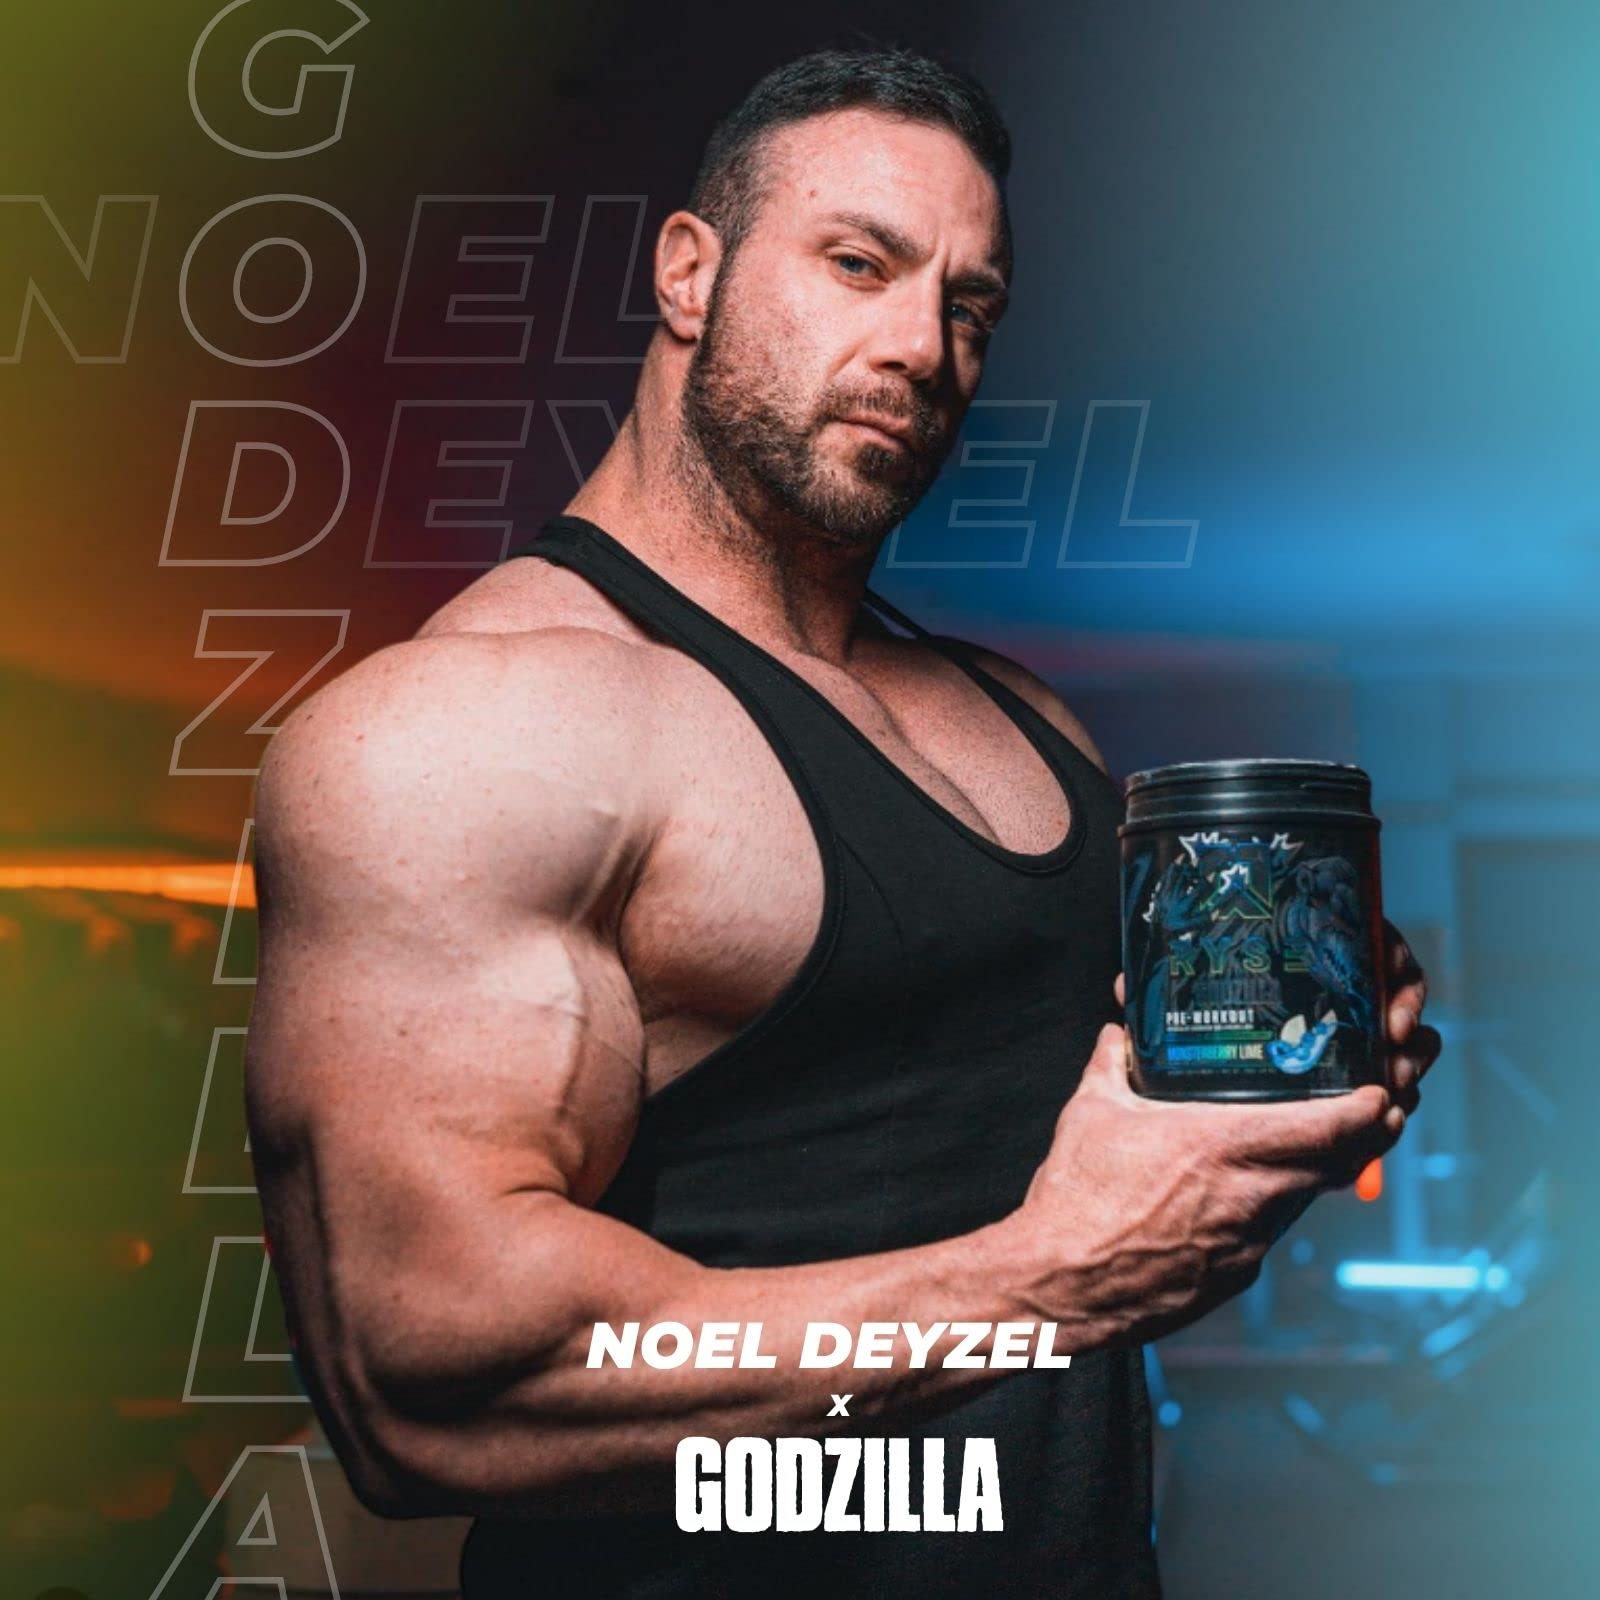 Ryse Signature Series Godzilla Pre Workout | Pump, Energy, Strength, and Focus | Citrulline, Beta-Alanine, Caffeine | 40 Servings (Monsterberry Lime)